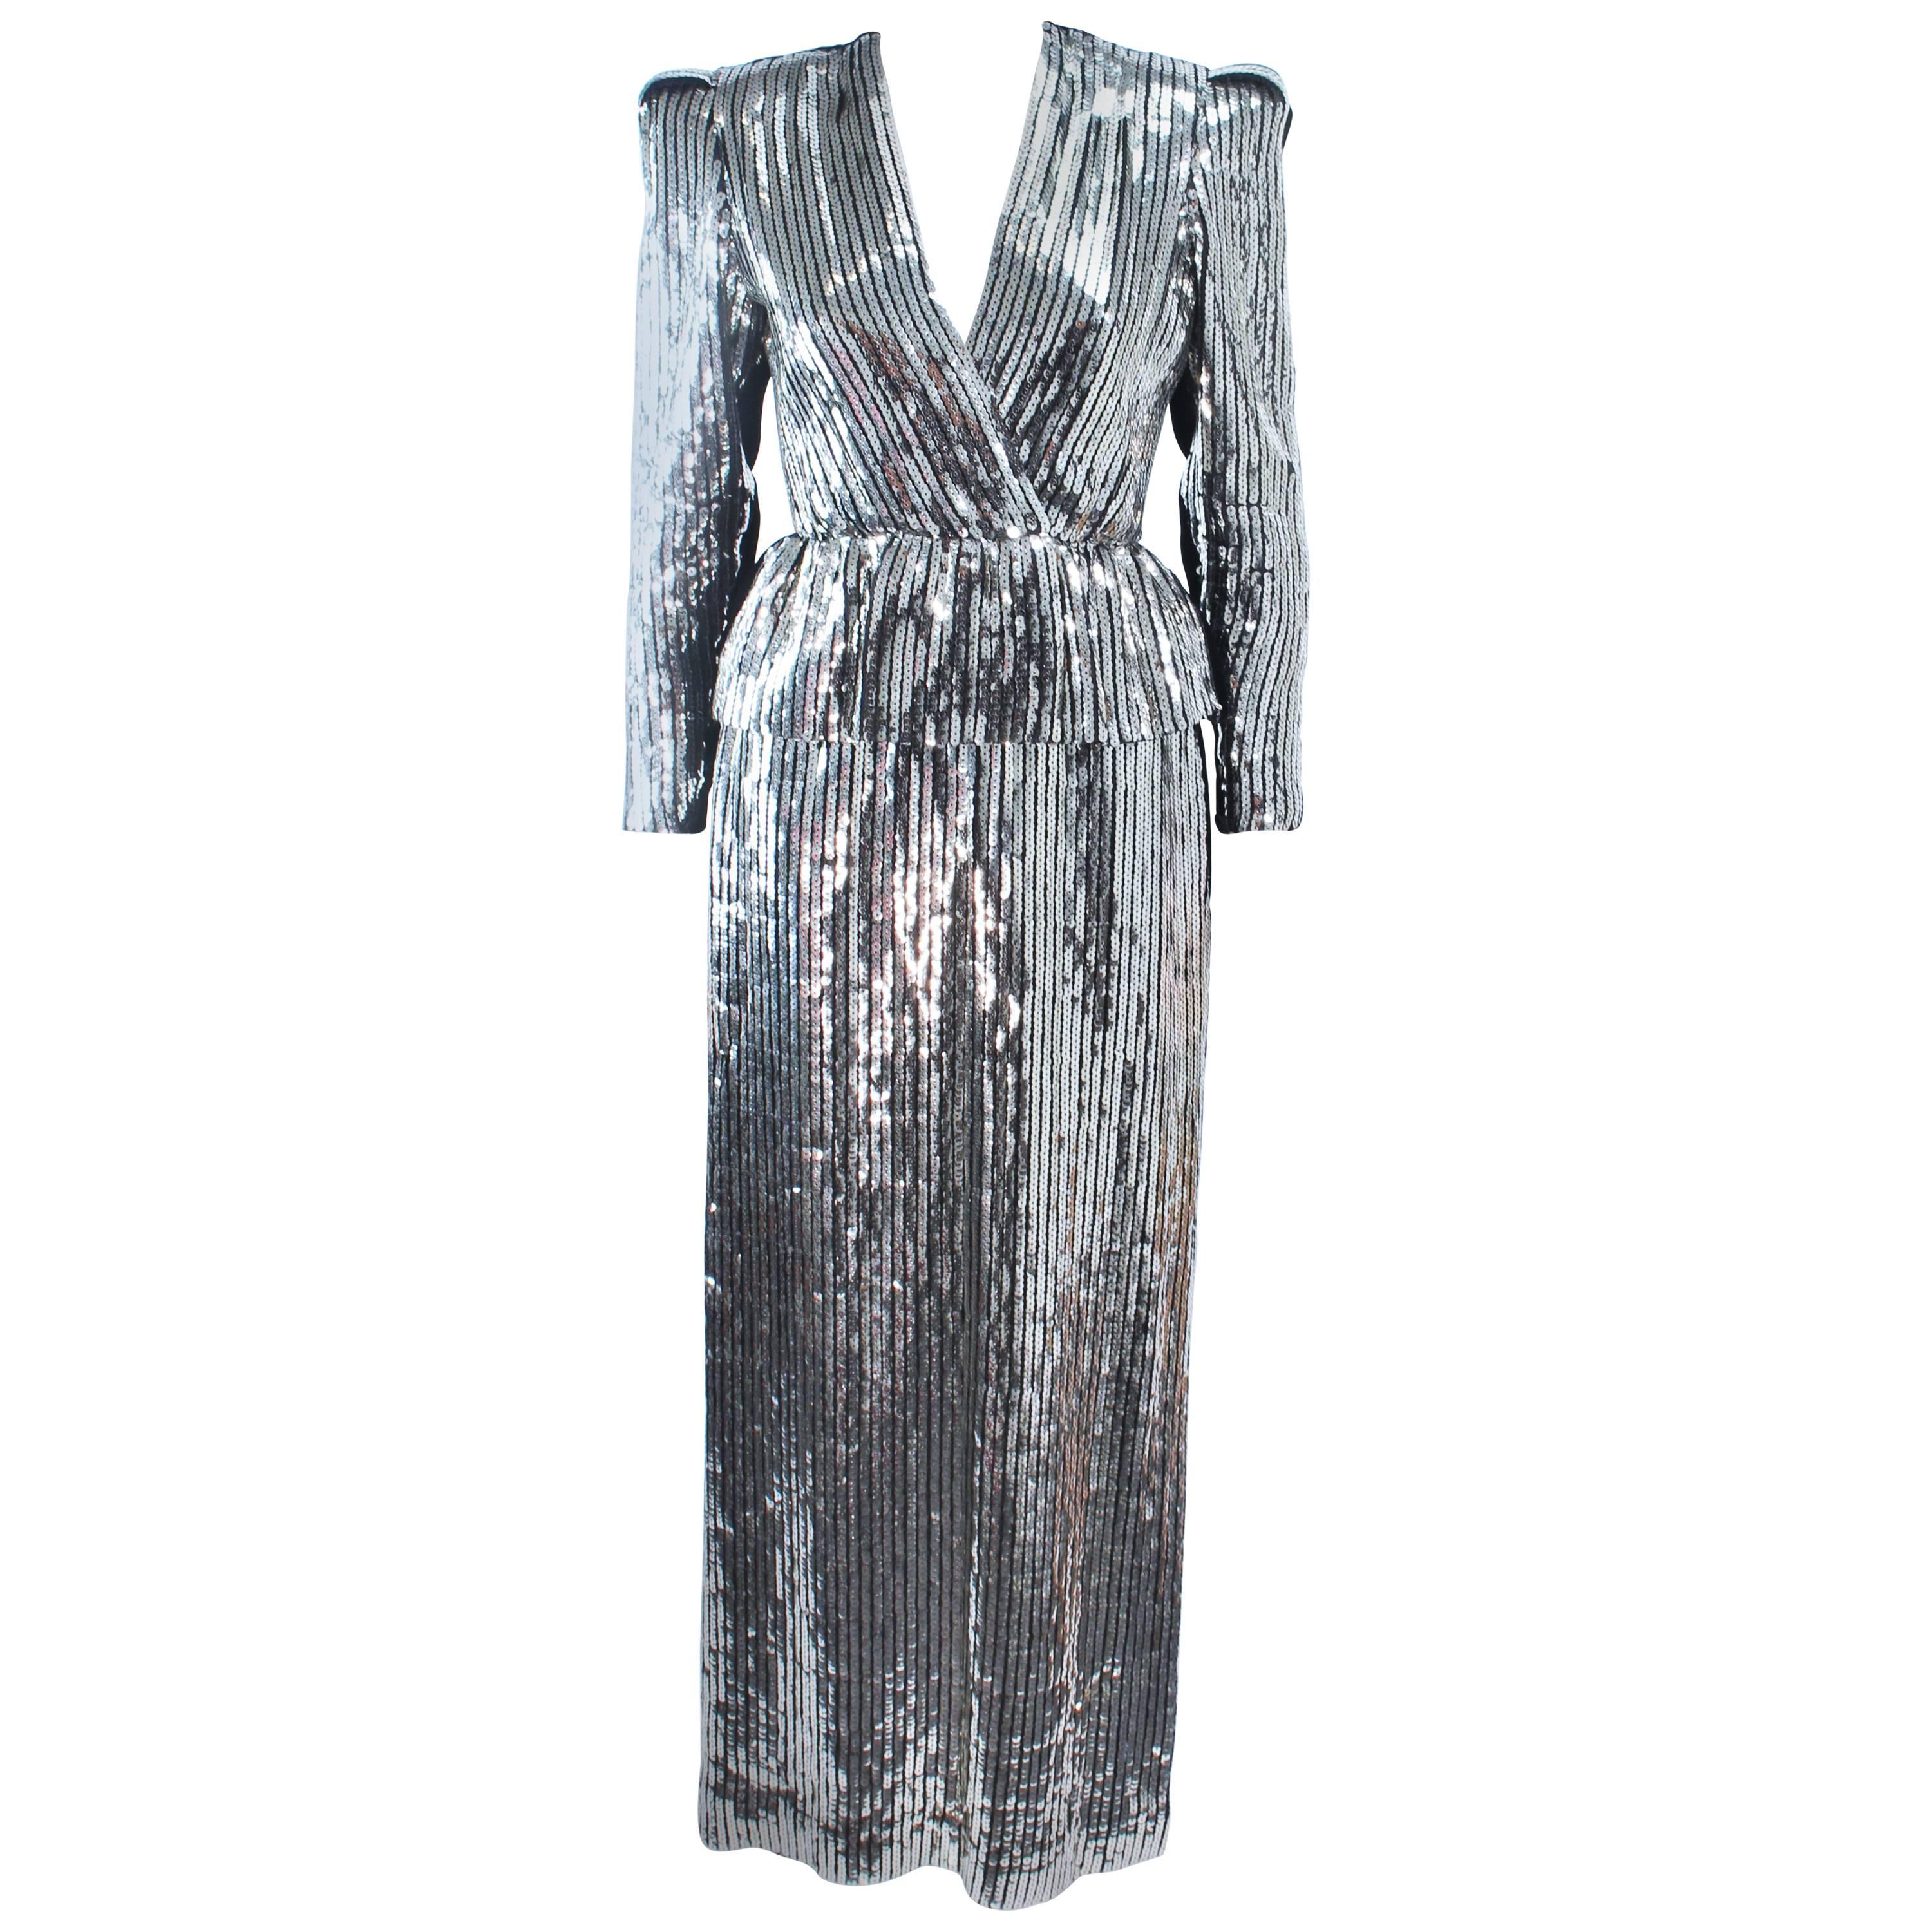 ESTEVEZ Silver Sequin and Velvet Gown Peplum Size 2